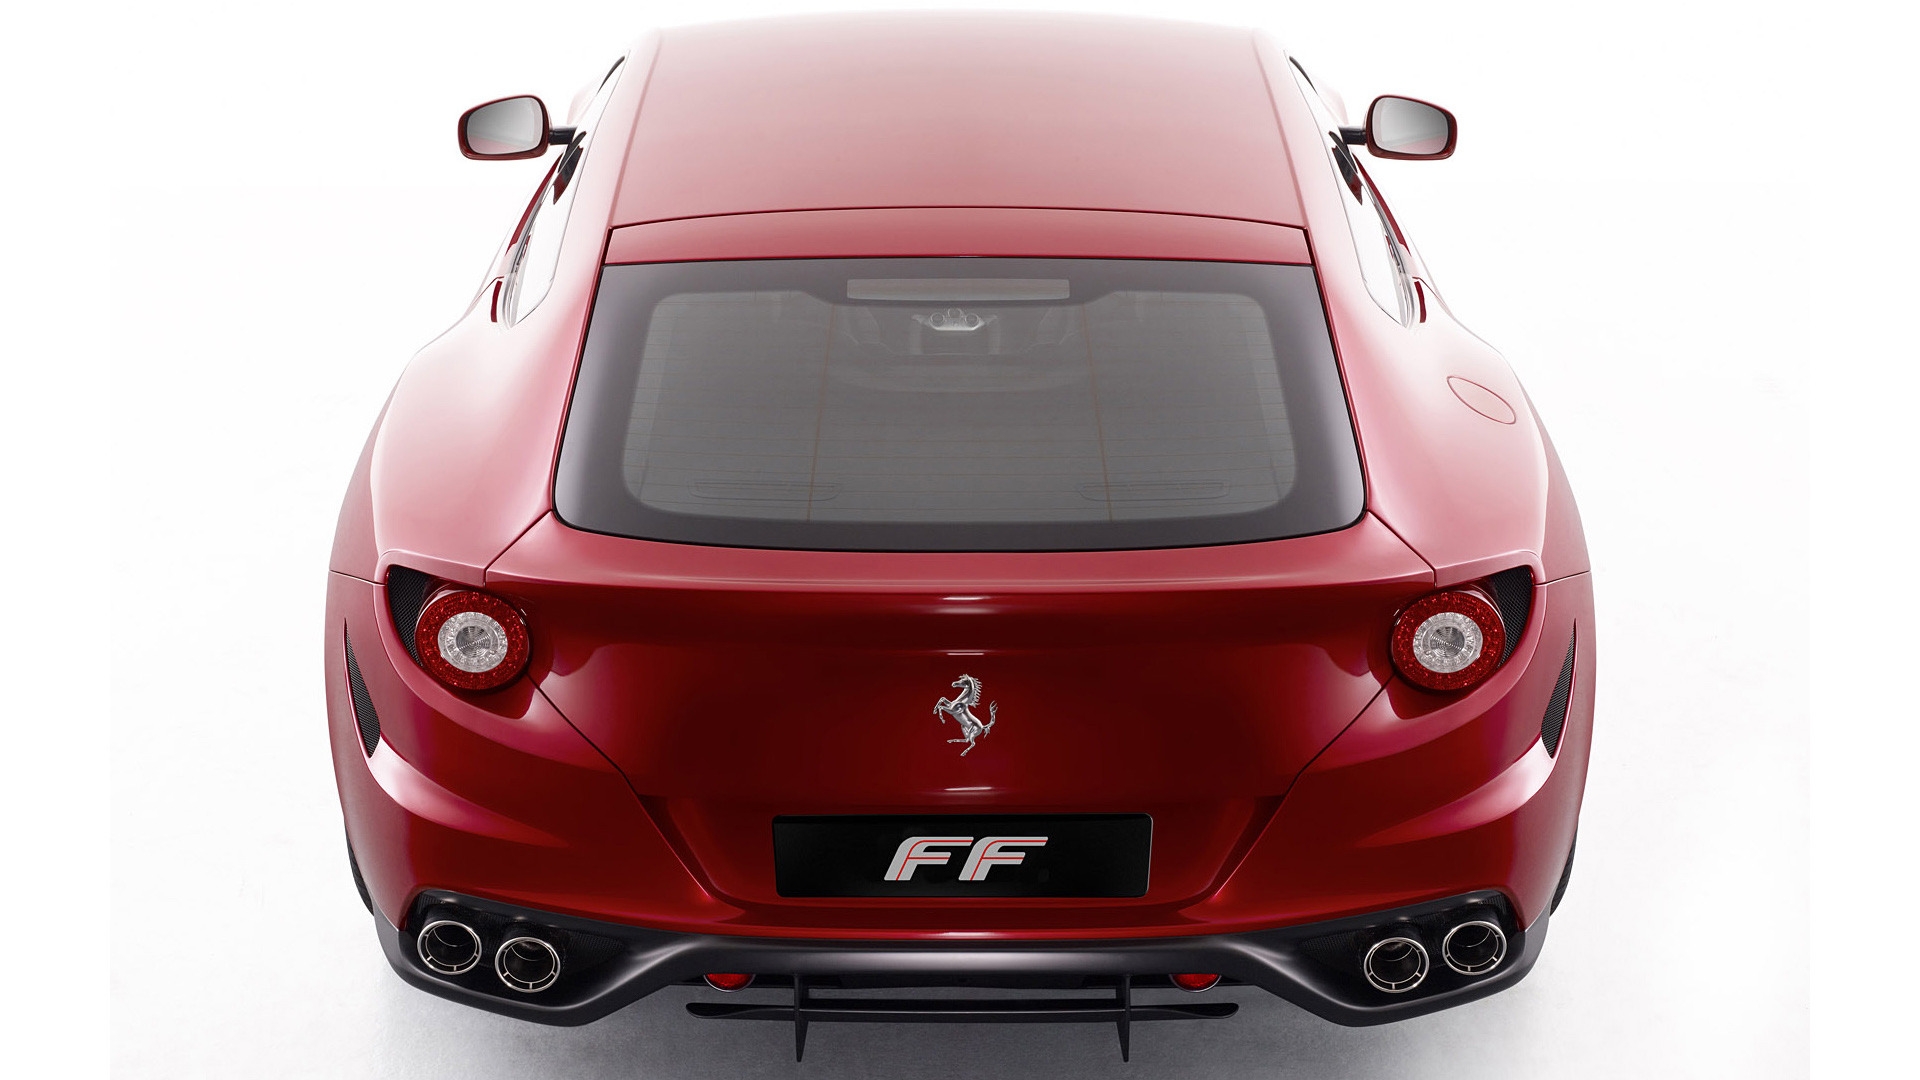 Ferrari FF Rear for 1920 x 1080 HDTV 1080p resolution